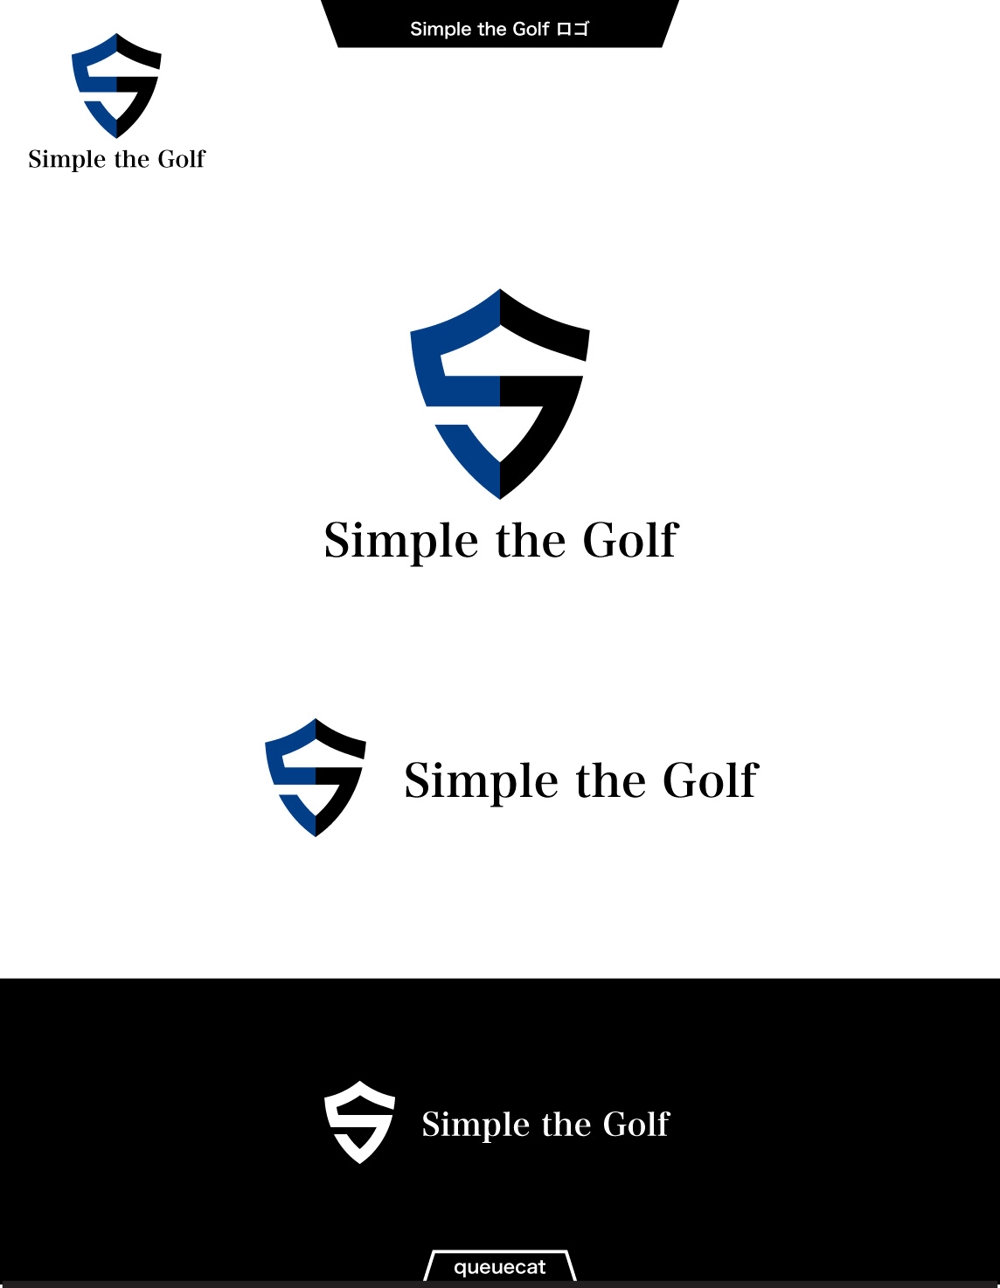 Simple the Golf1_1.jpg